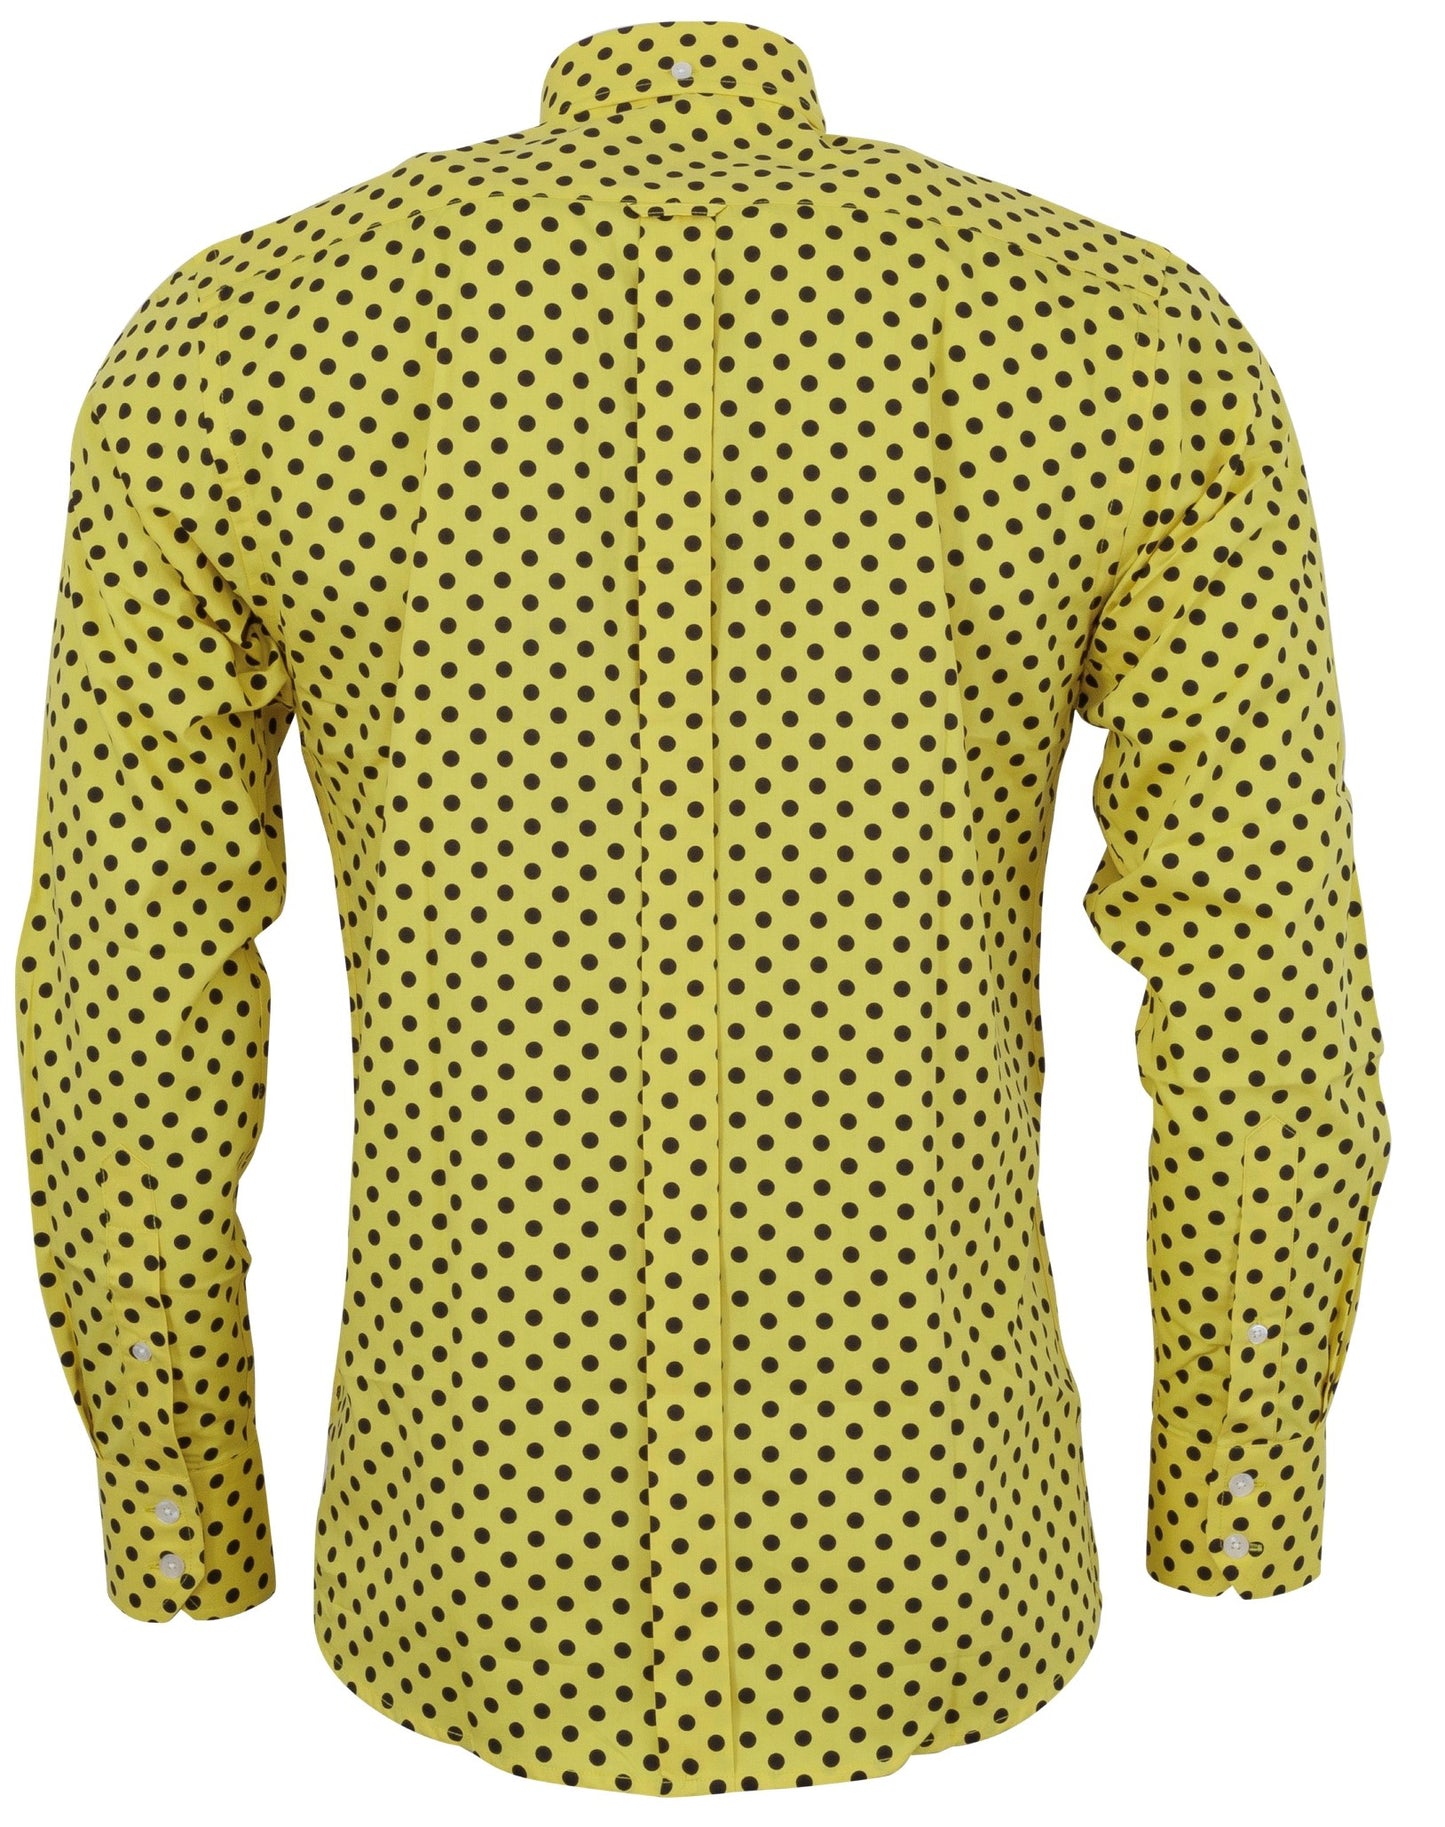 Relco Mustard and Black Polka Dot Mens Classic Mod Vintage Design Shirts